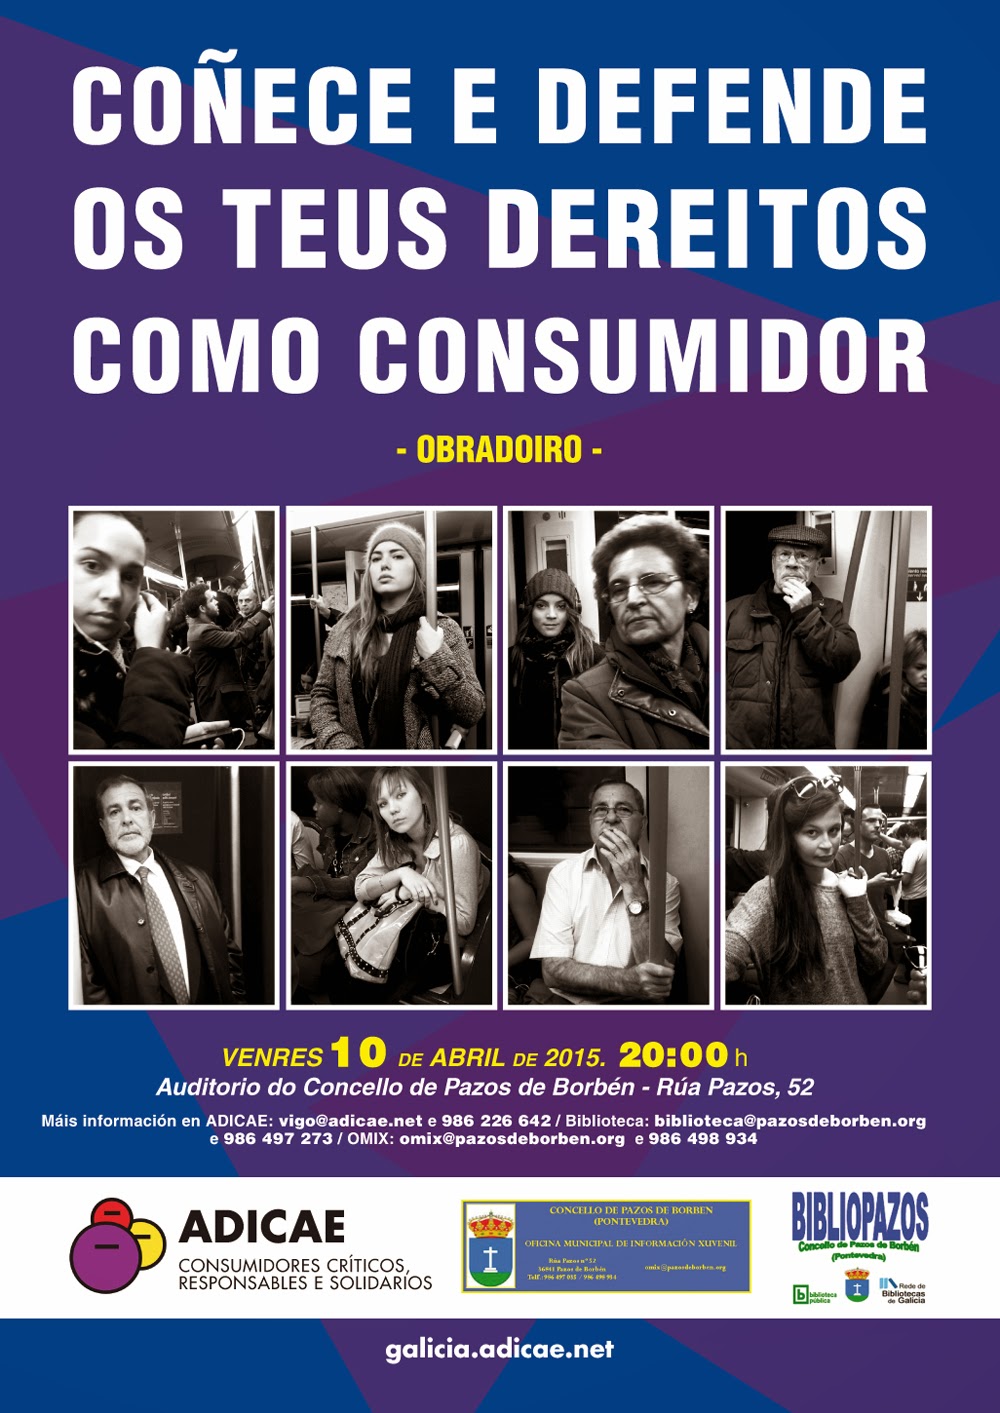 https://www.dropbox.com/s/wkrrryaizs6gkcc/Cartel-Derechos-Consumidor-VIGO-abr-2015.jpg?dl=0